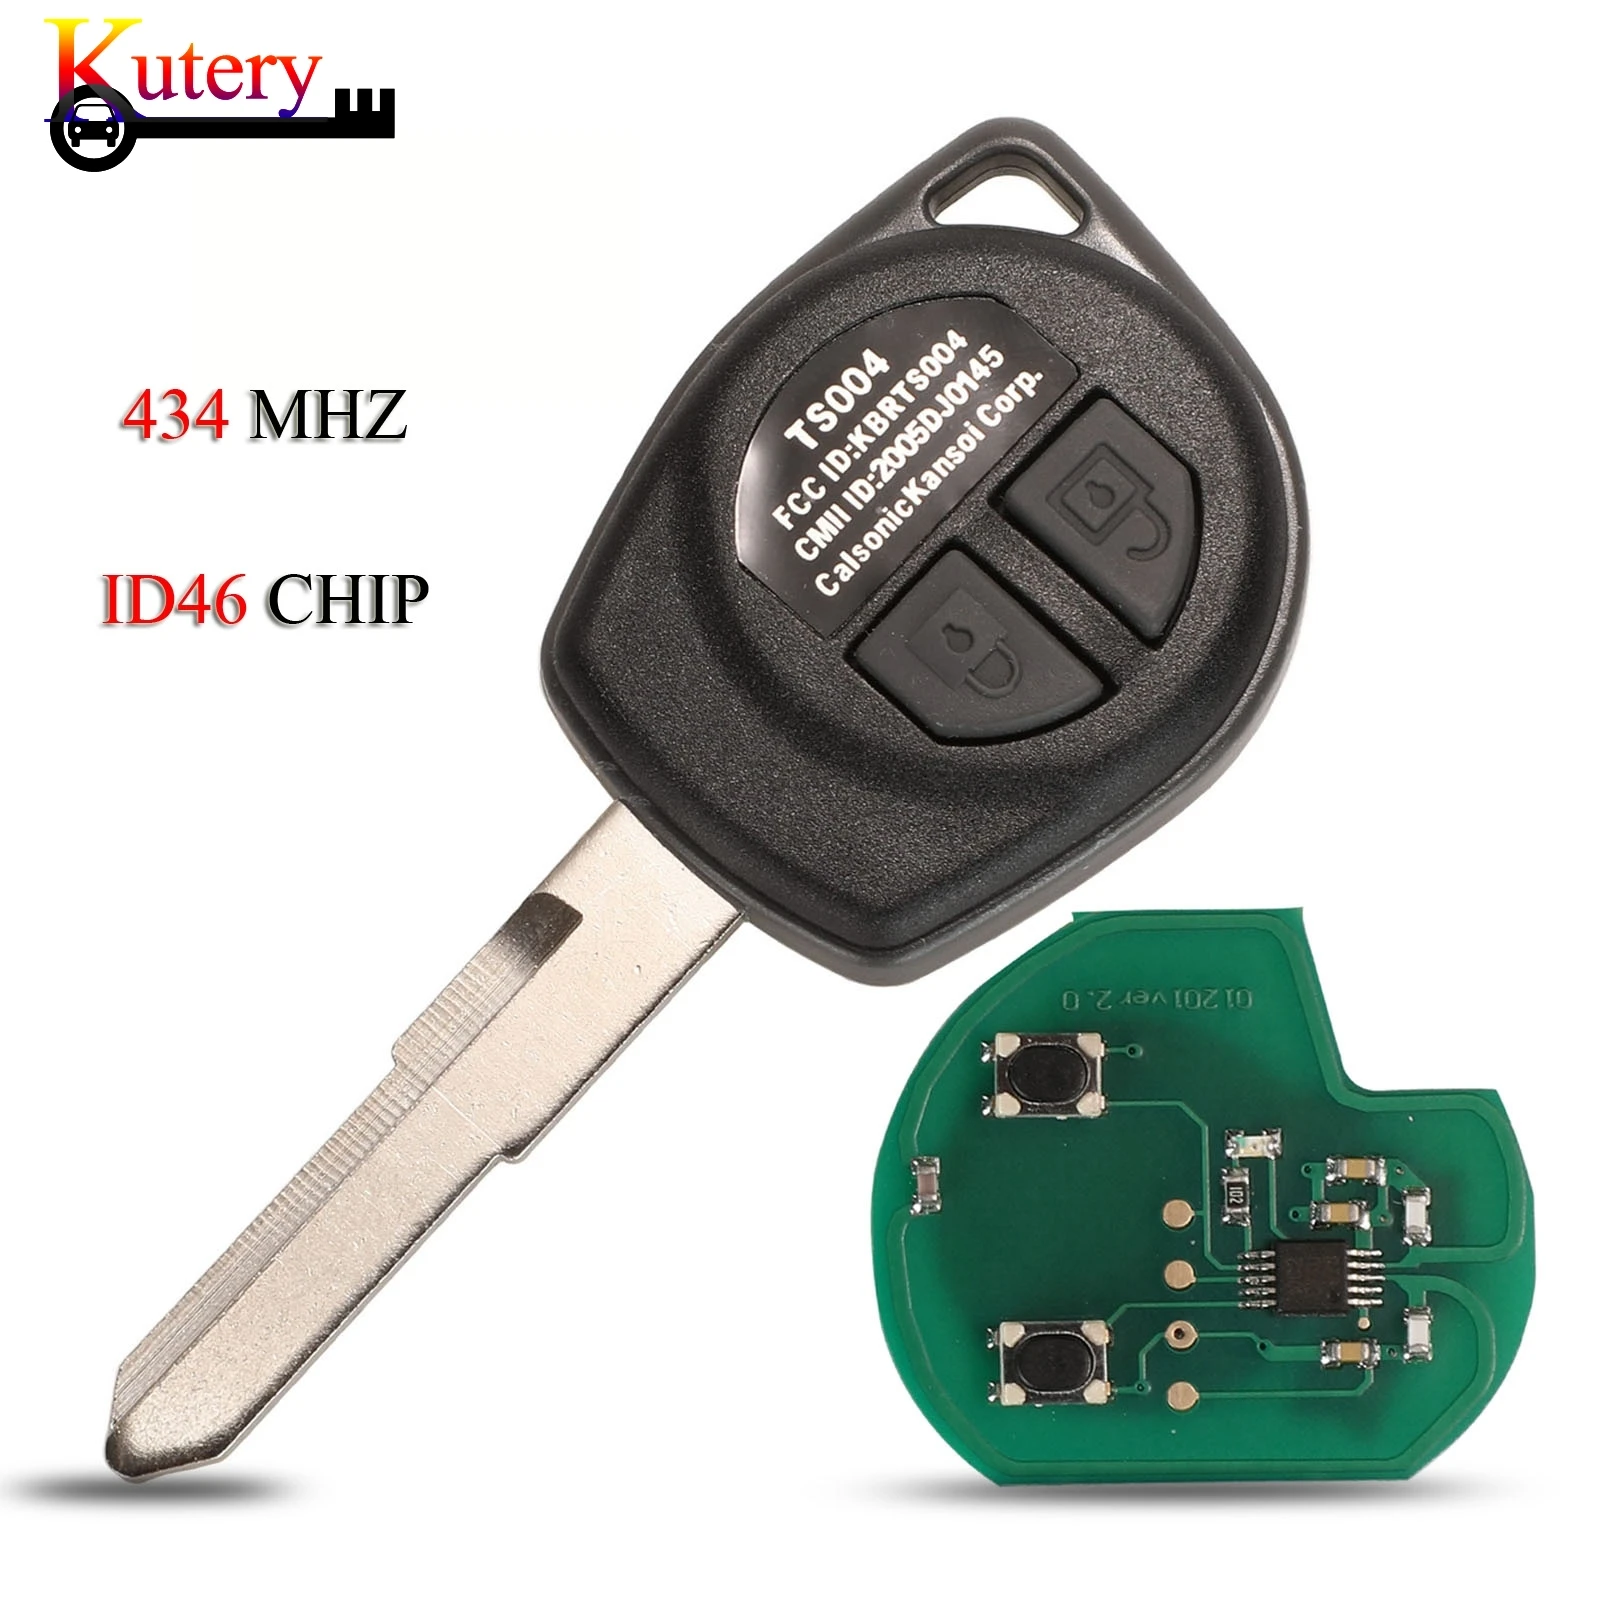 

jingyuqin 5pc/Lot Remote Car Key For Suzuki Swift SX4 Alto Vitara Ignis Jimny 2006-2010 433MHZ ID46 Chip KBRTS004 With 2 Buttons